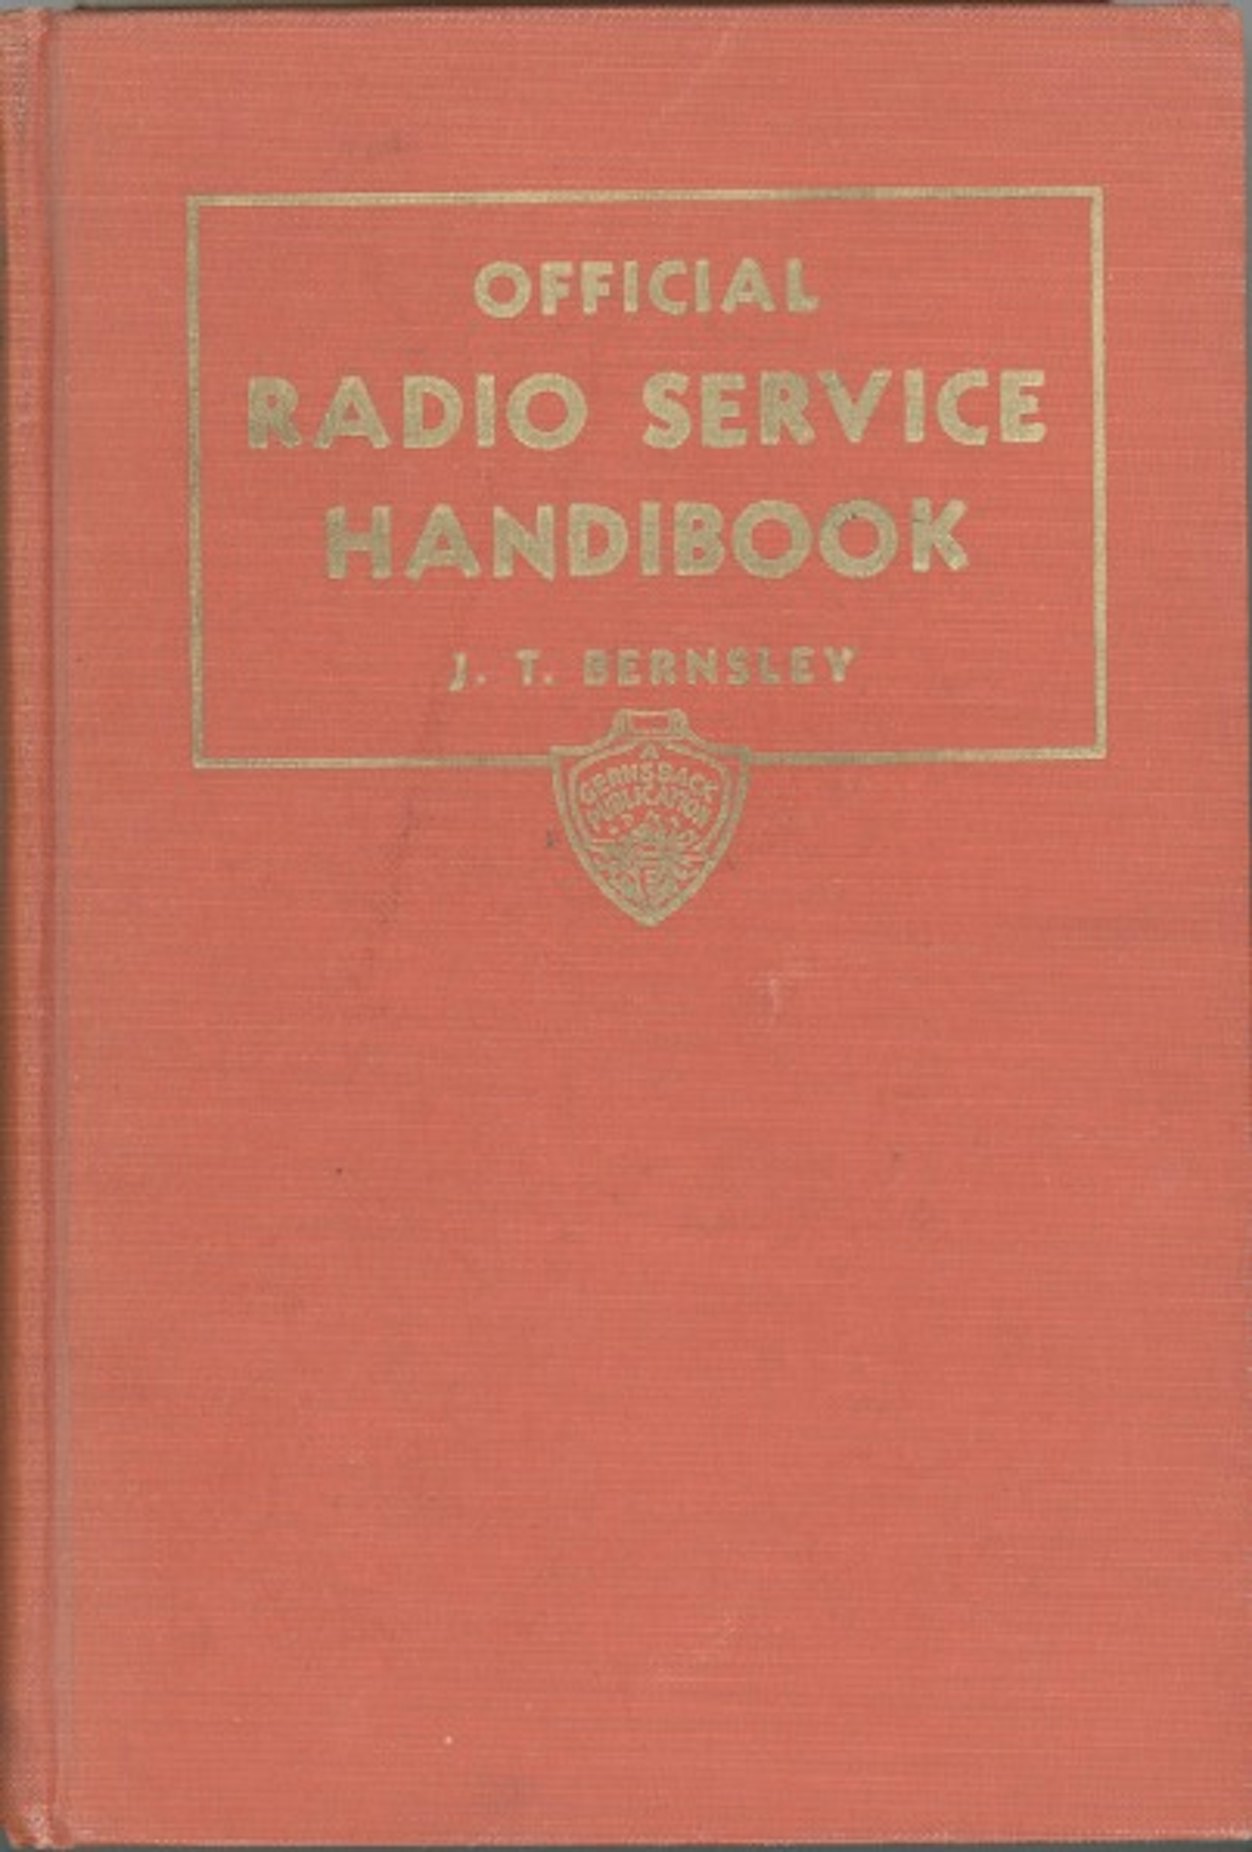 Official Radio Service Handbook